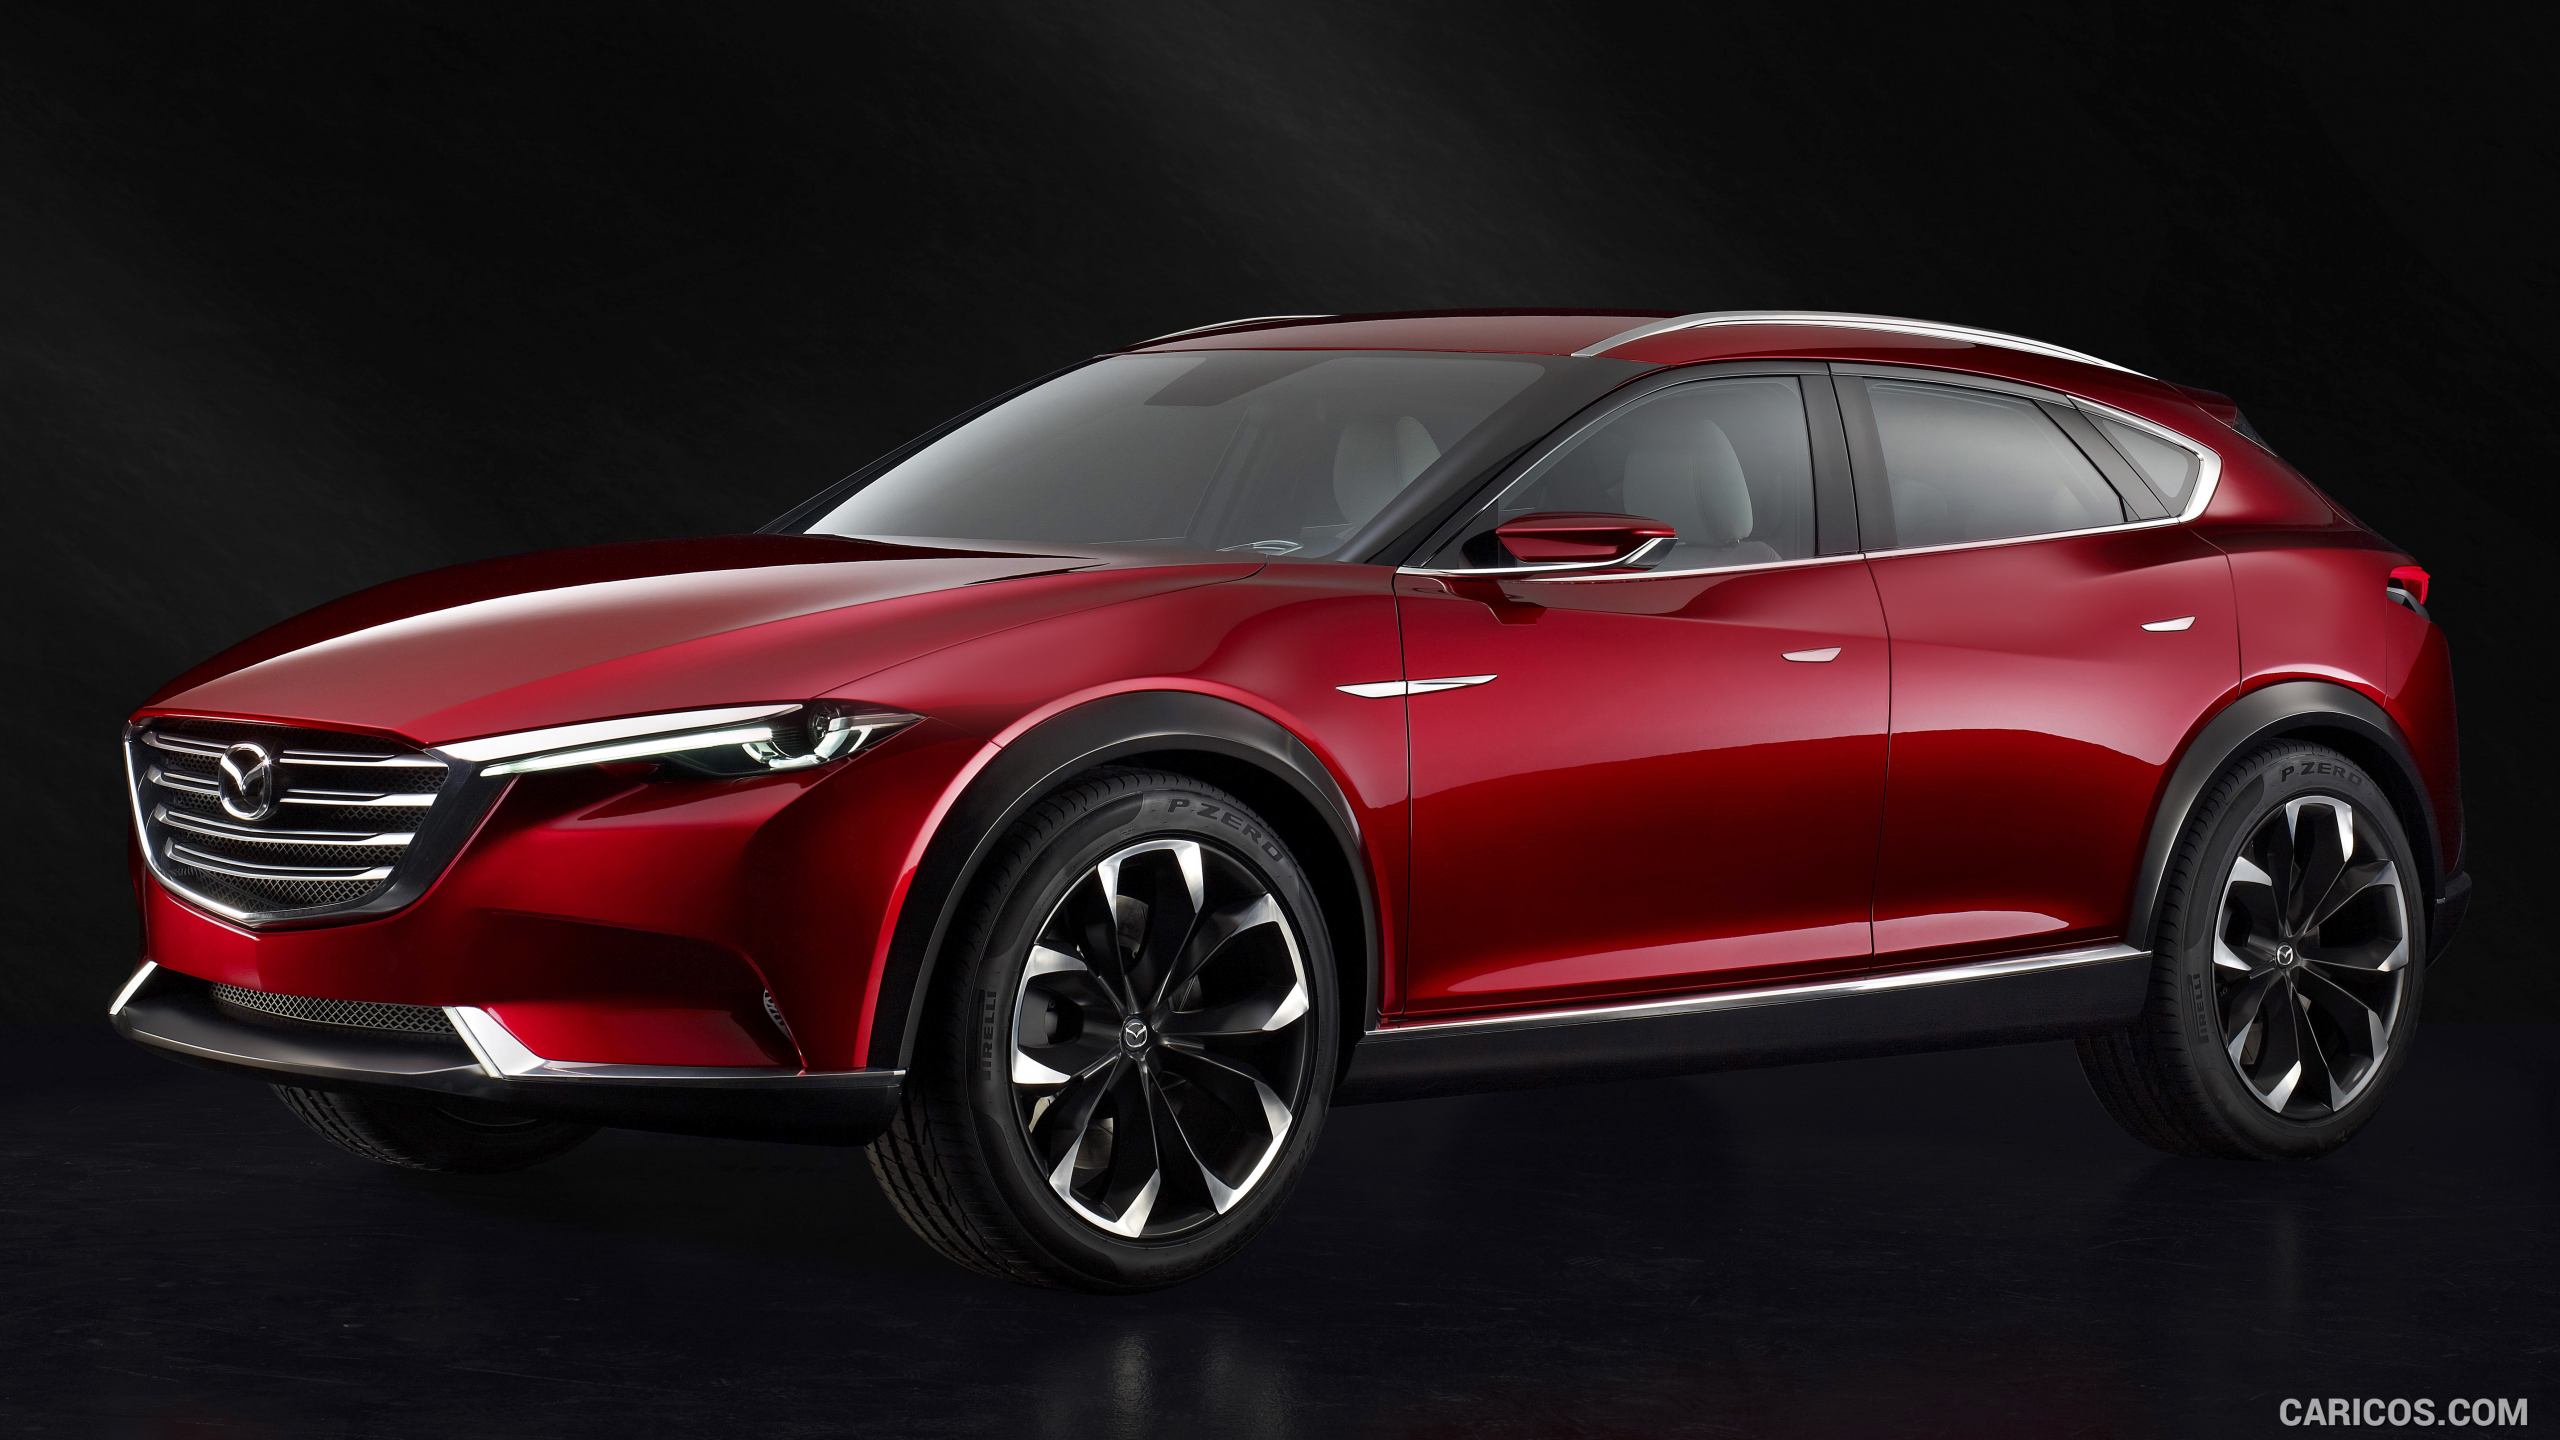 2015 Mazda Koeru Crossover Concept - Front, #8 of 17